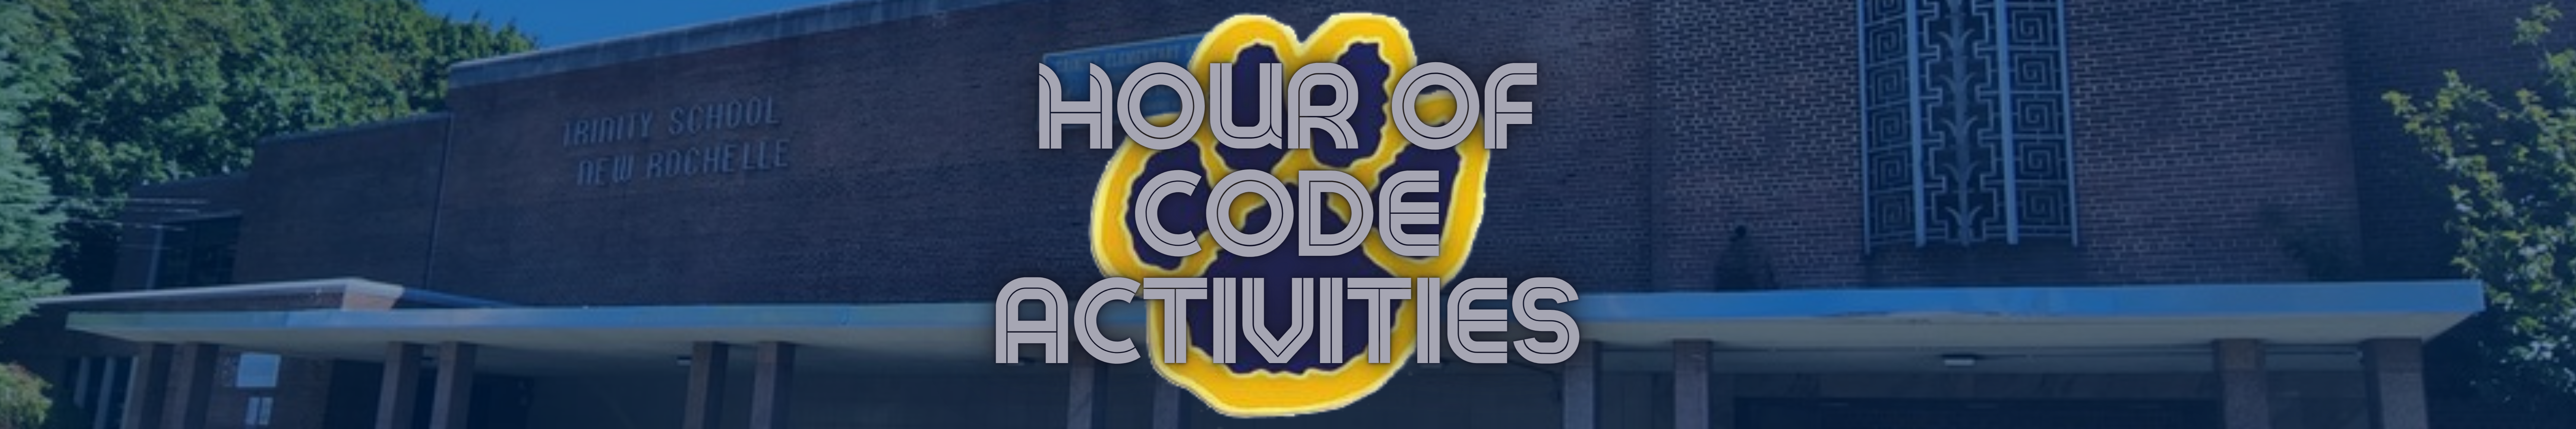 hour of code banner